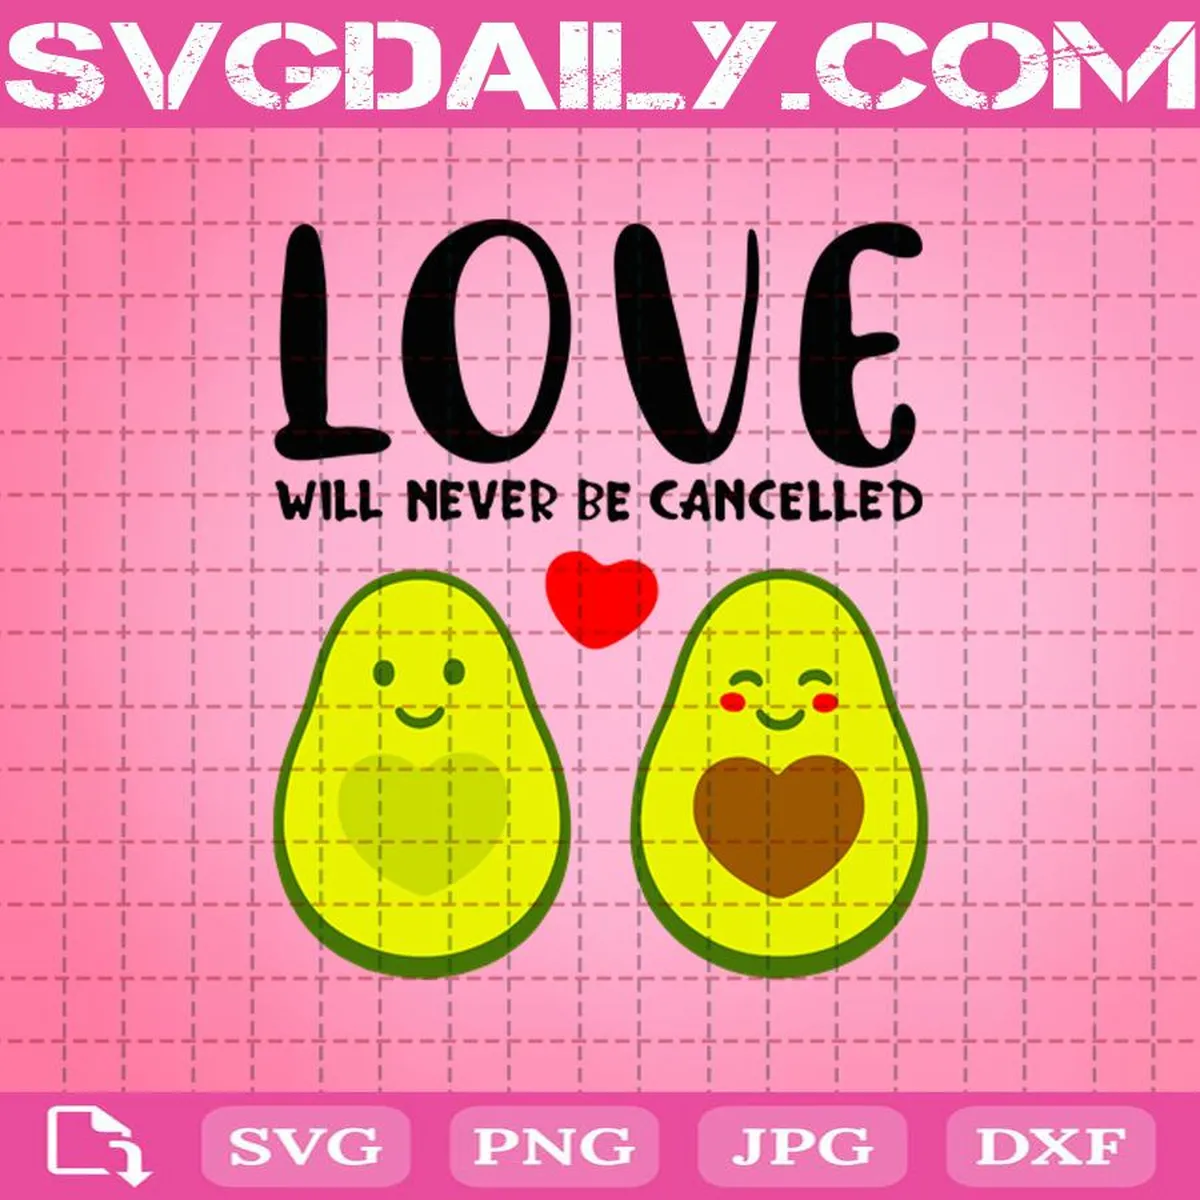 Love Will Never Be Cancelled Svg, Happy Valentine’s Day 2021 Pajama Svg, Avocado Lover Svg, Valentine Svg